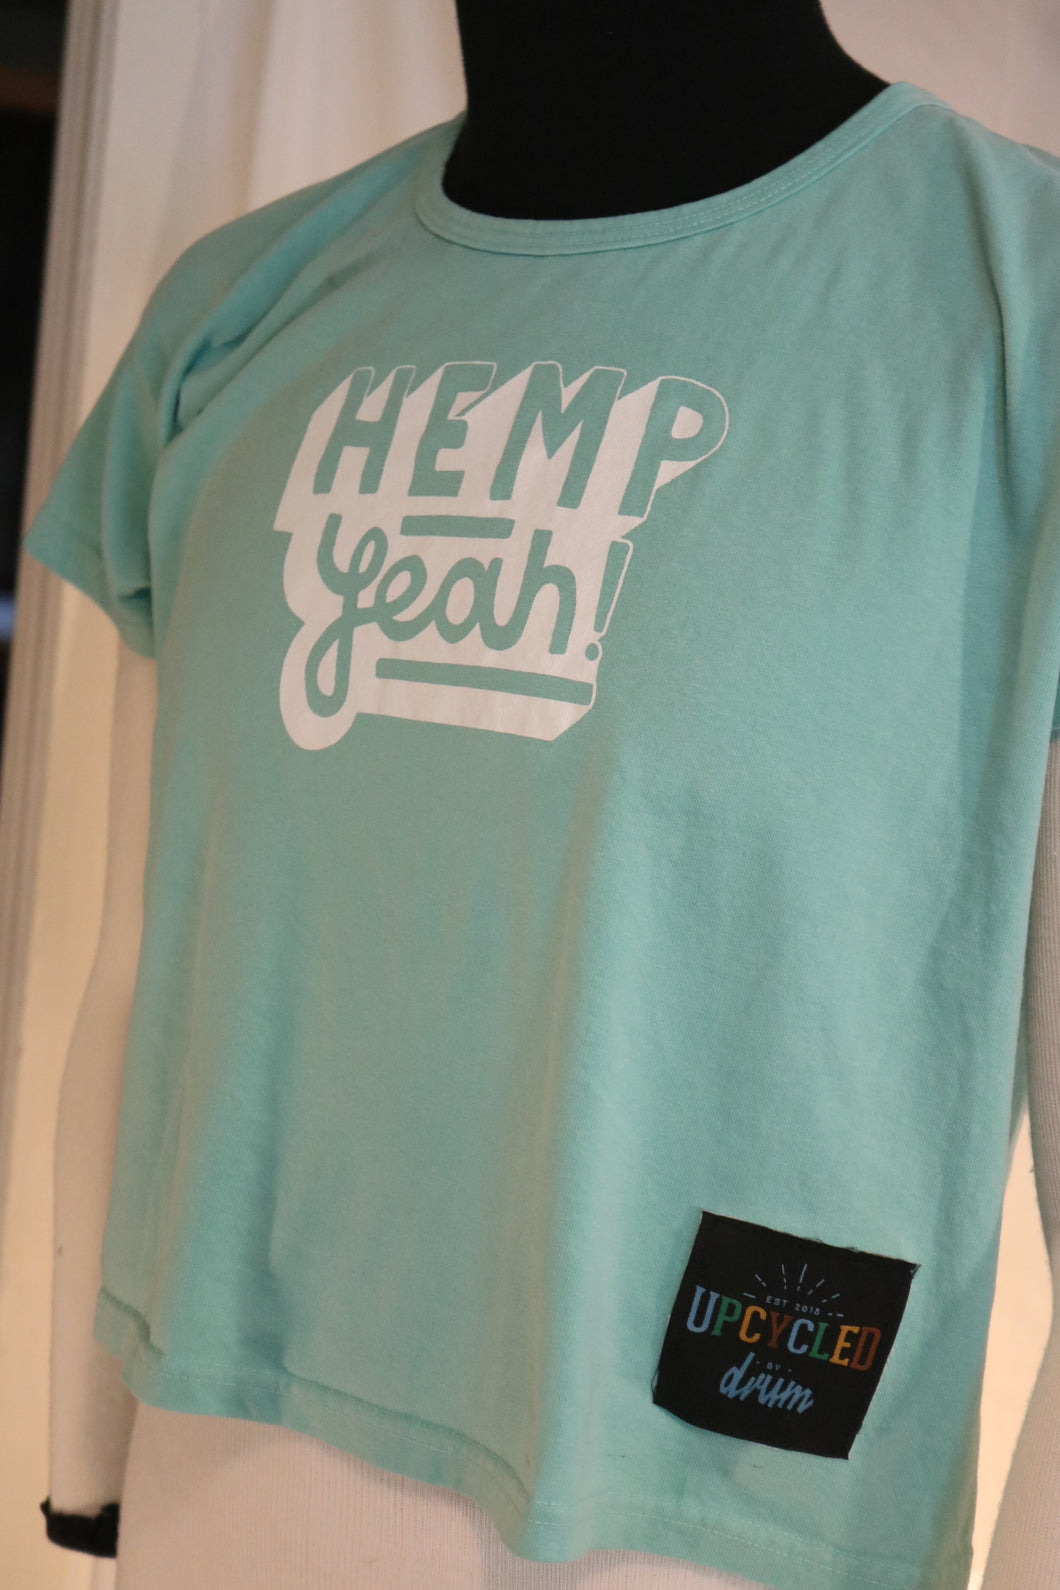 Hemp Yeah! Half Shirt 100% Cotton